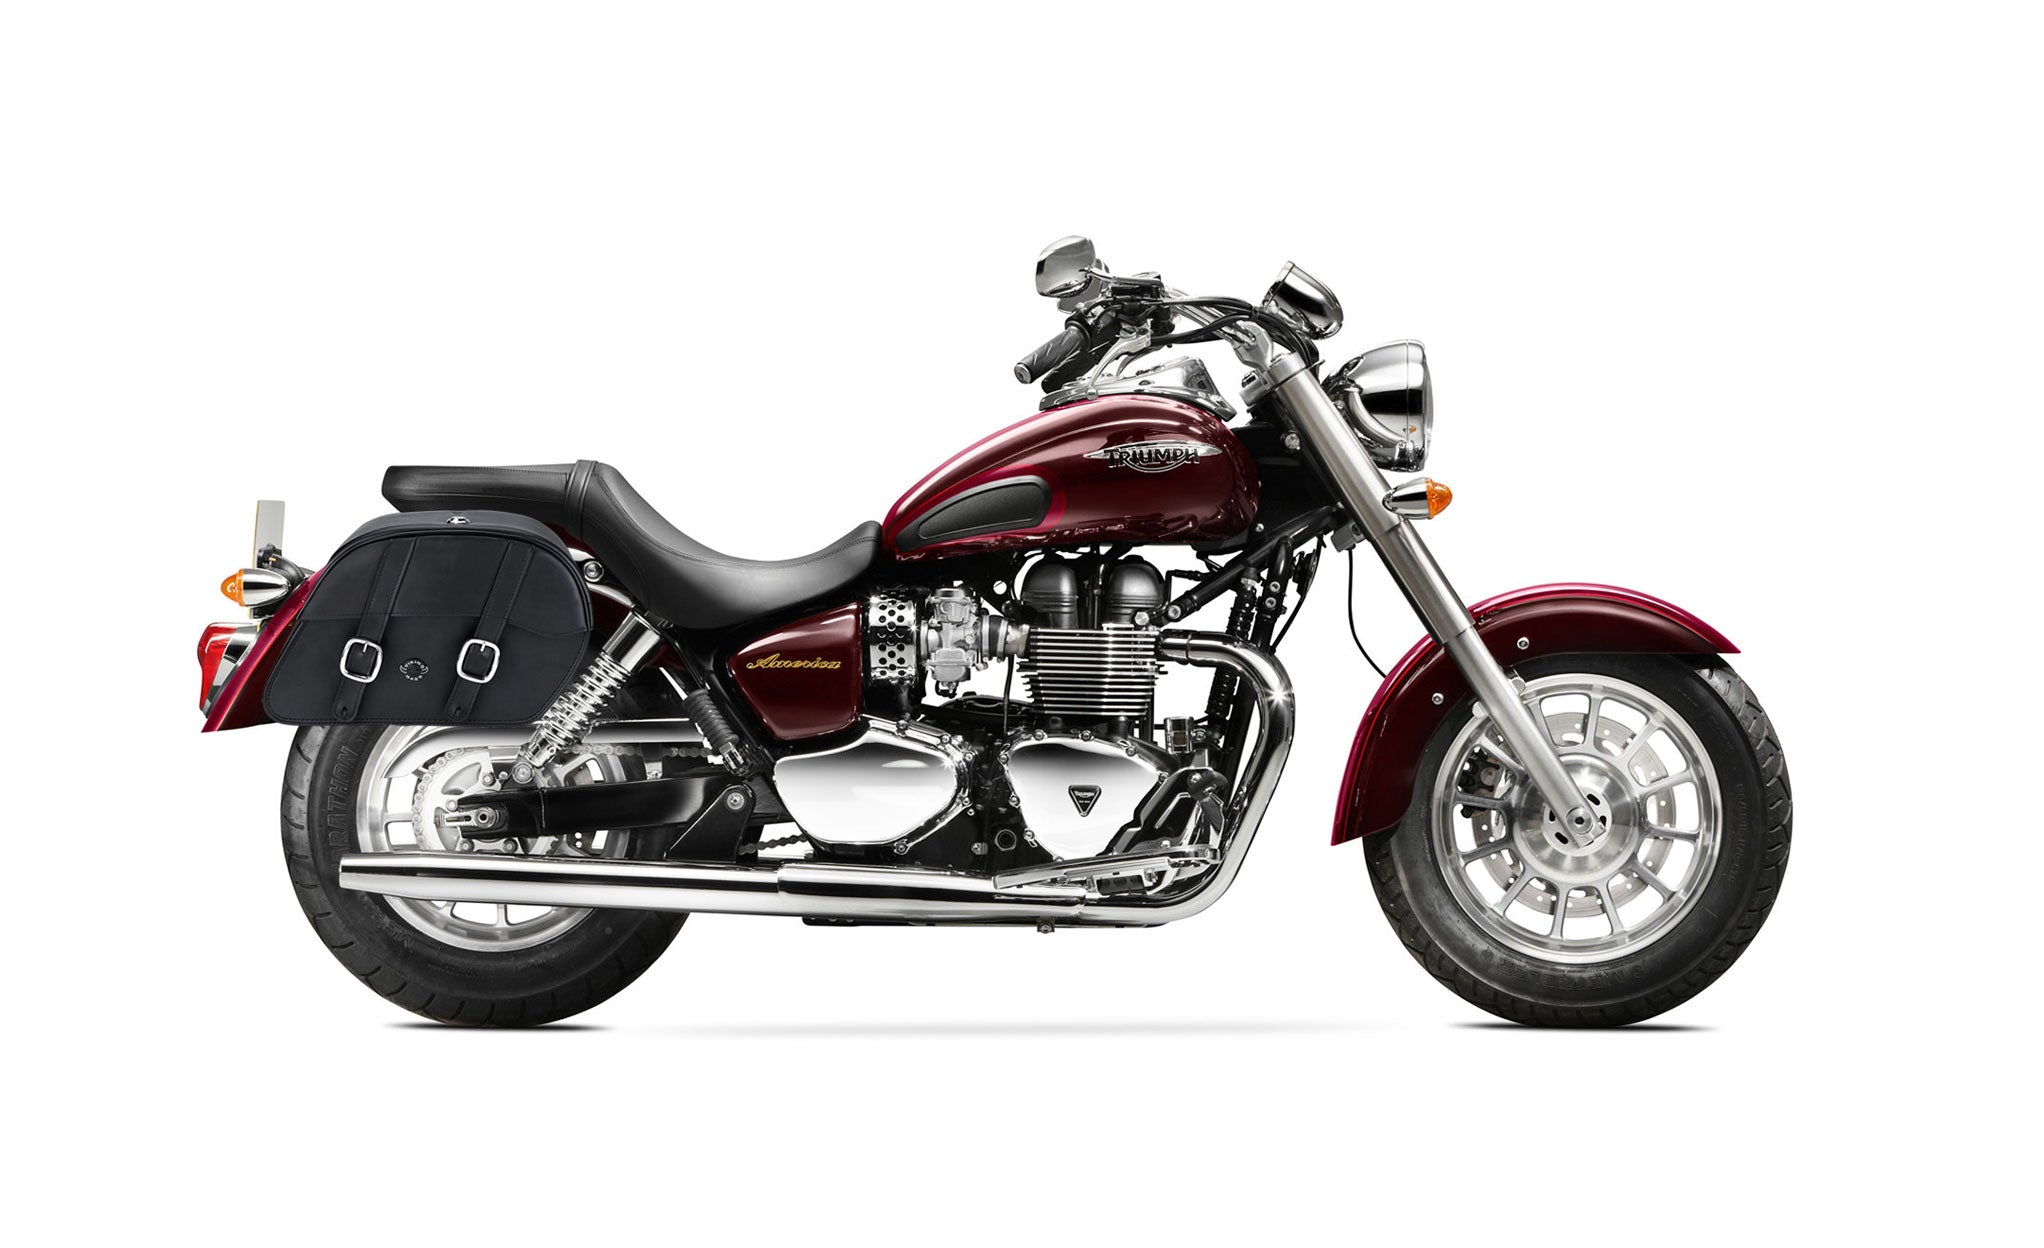 Viking Skarner Medium Lockable Triumph America Leather Motorcycle Saddlebags on Bike Photo @expand